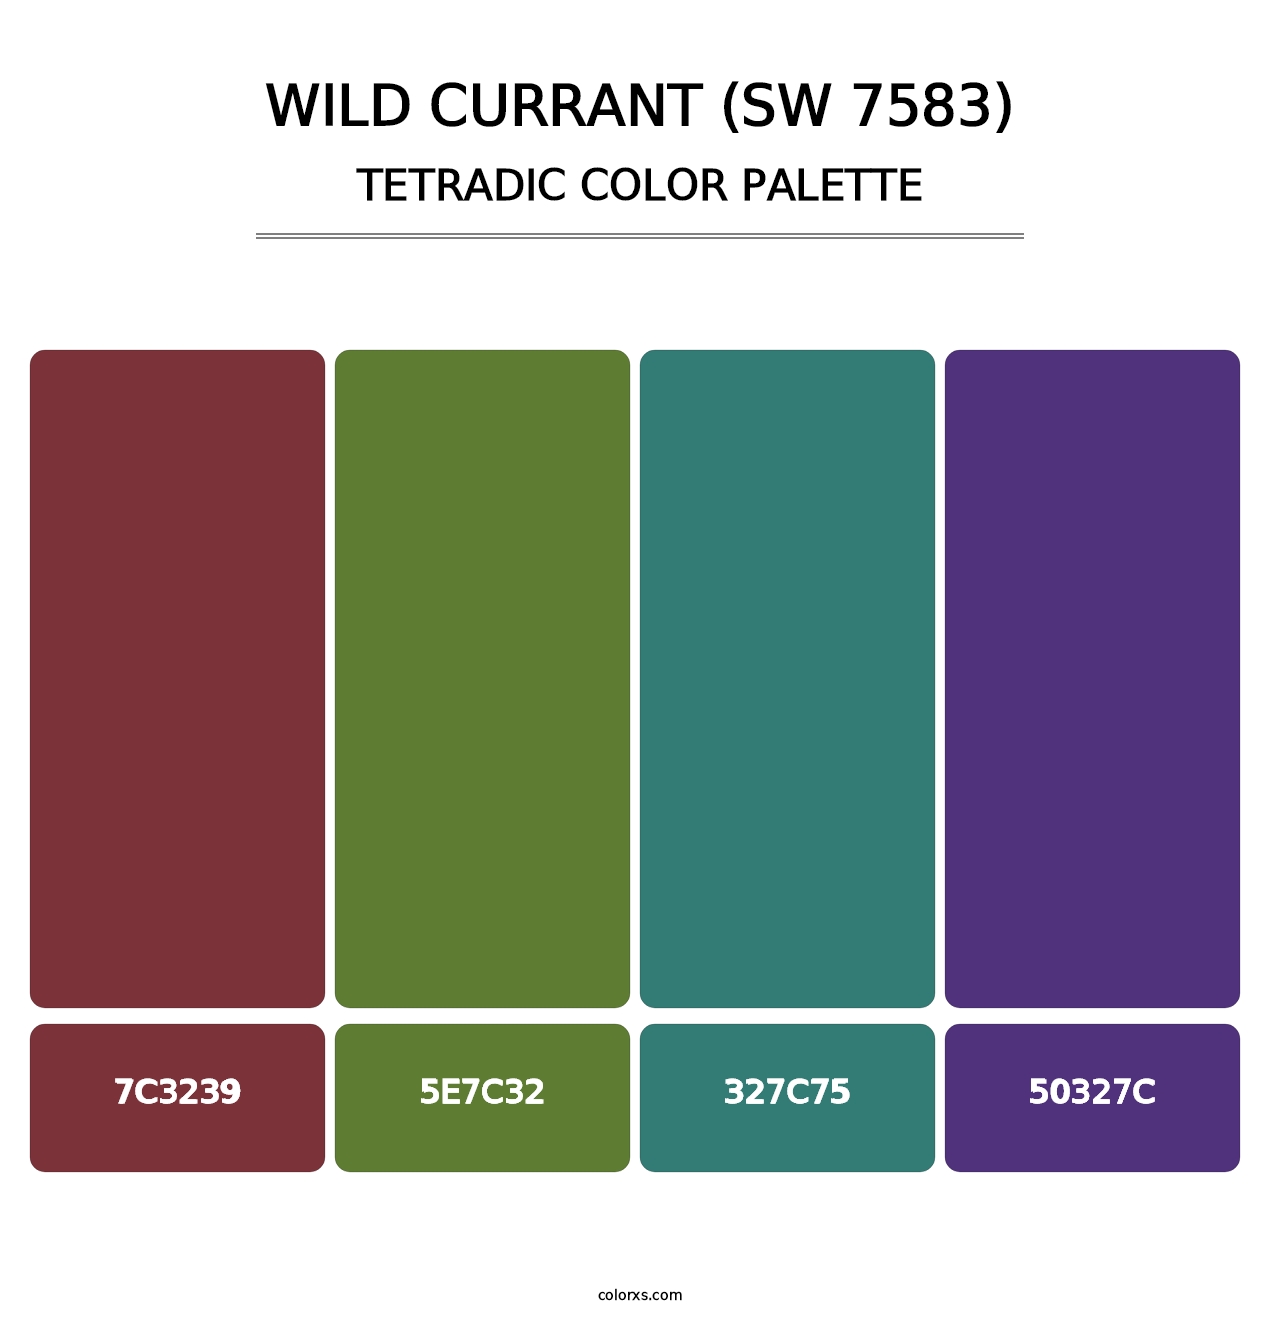 Wild Currant (SW 7583) - Tetradic Color Palette